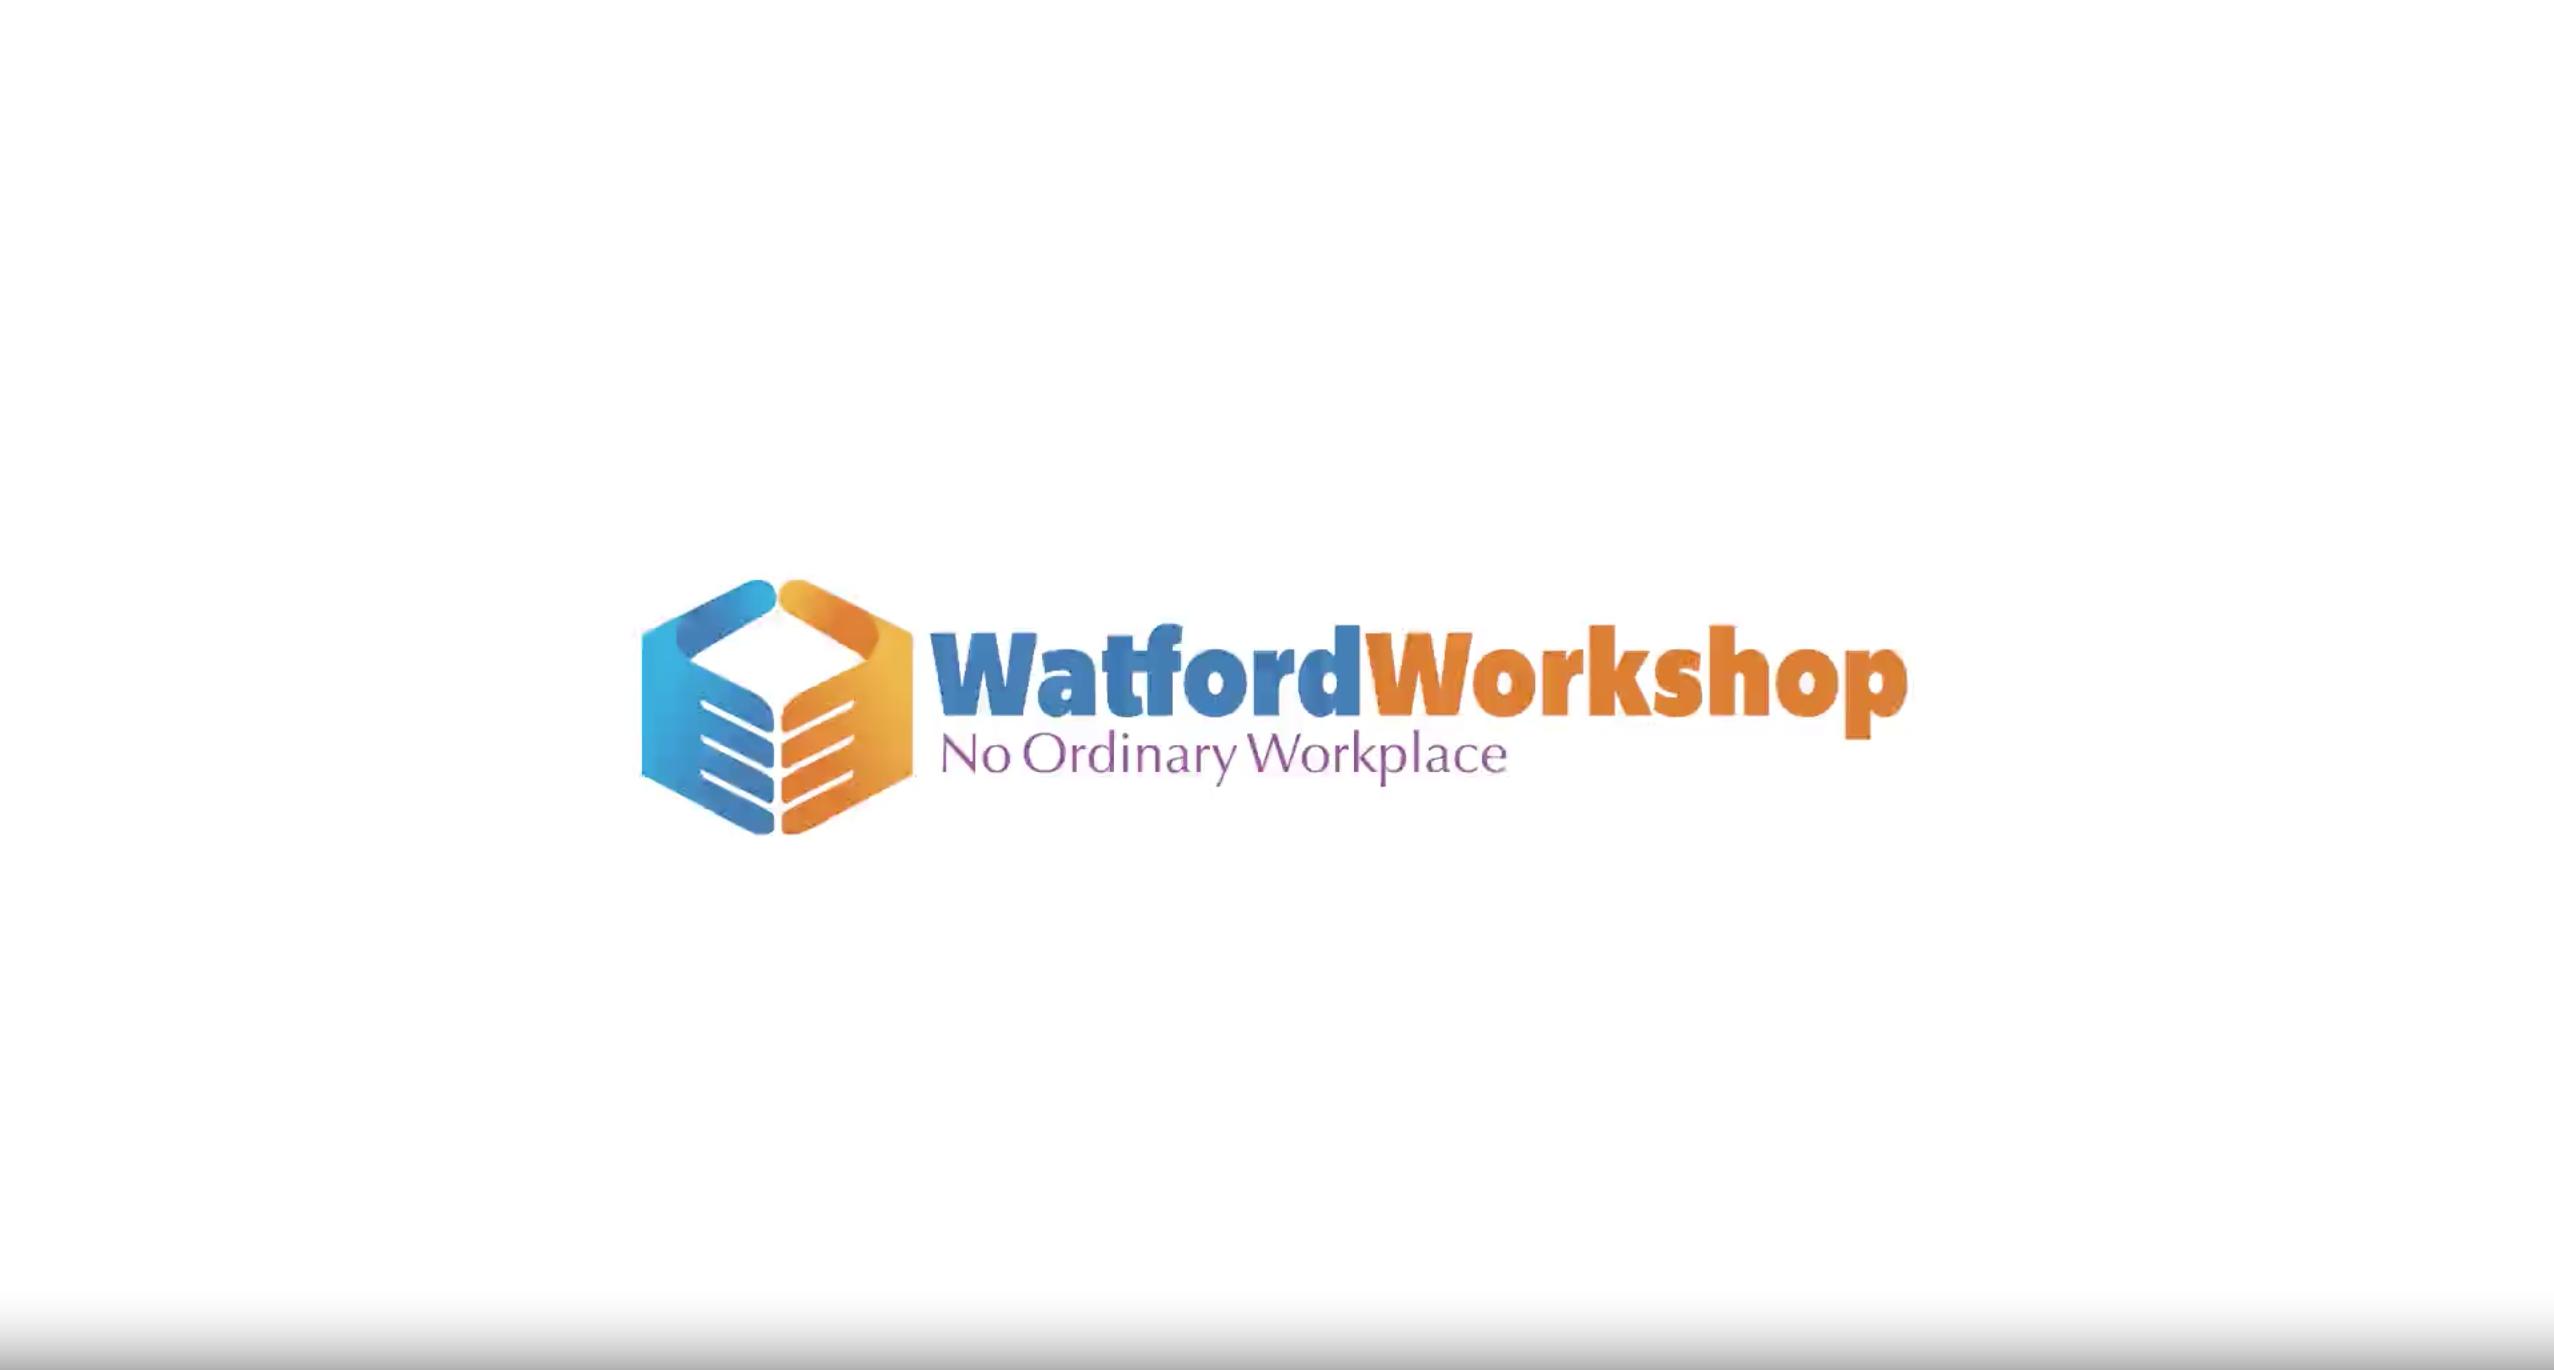 Watford Workshop: a short film